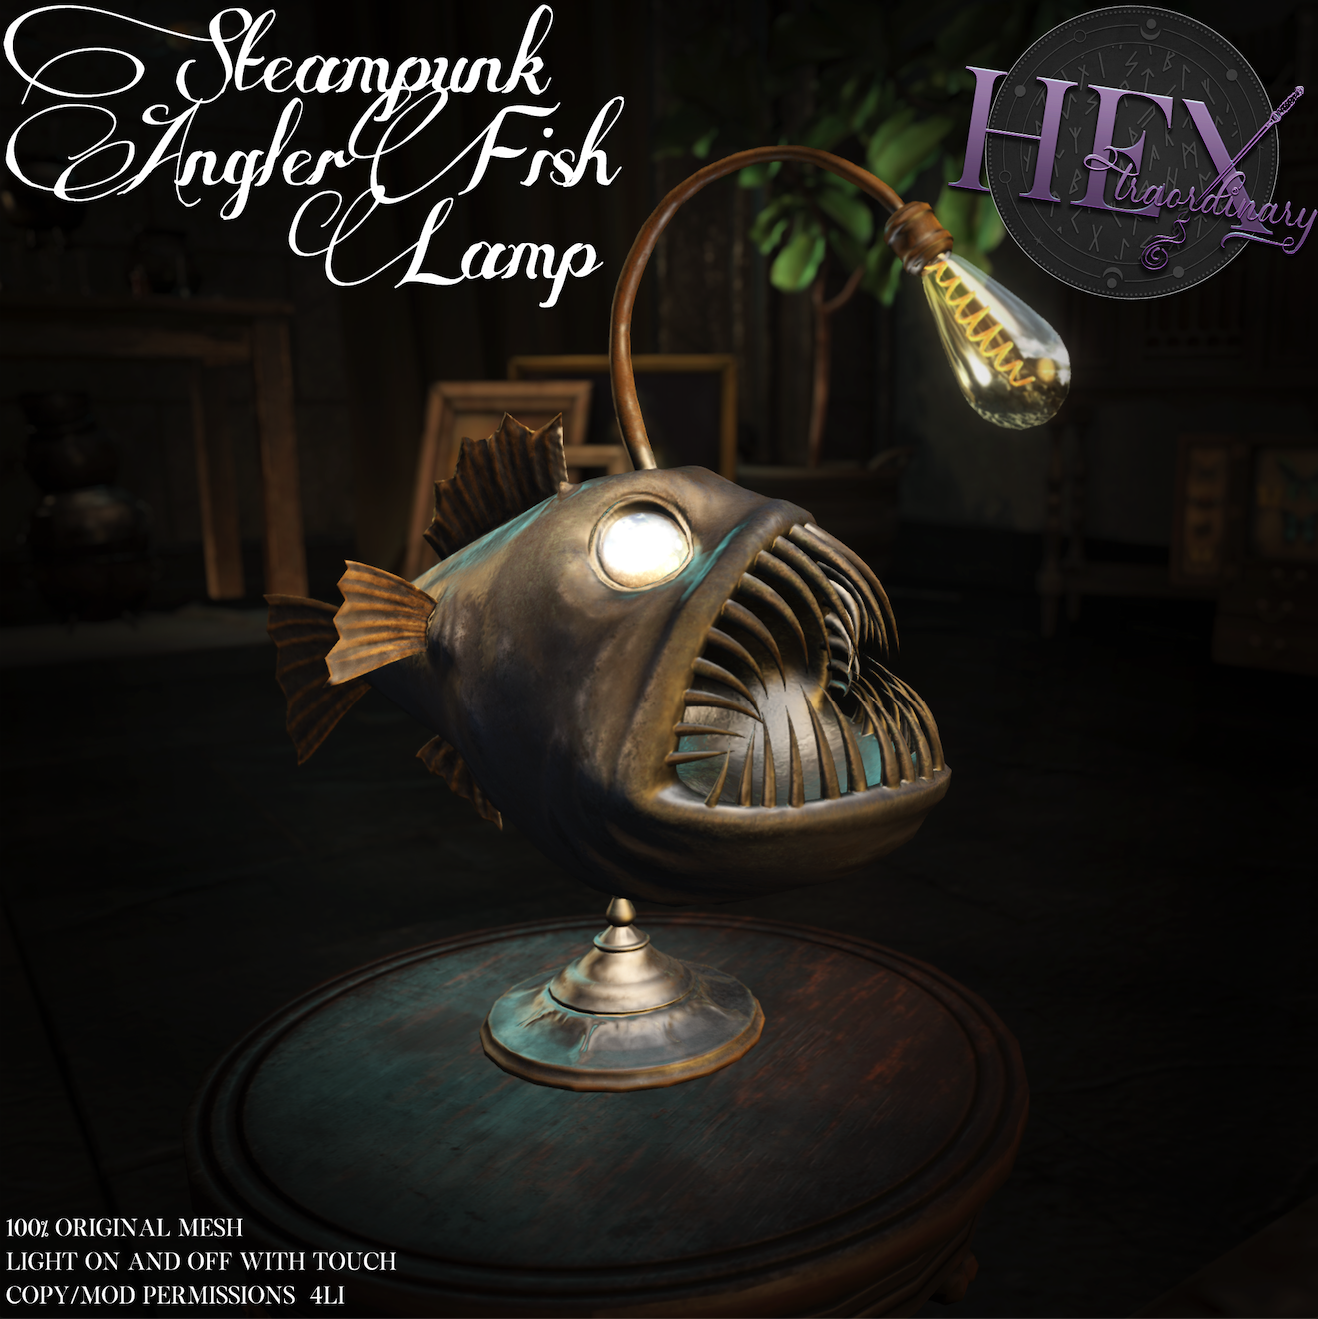 HEXtraordinary – Steampunk Angler Fish Lamp